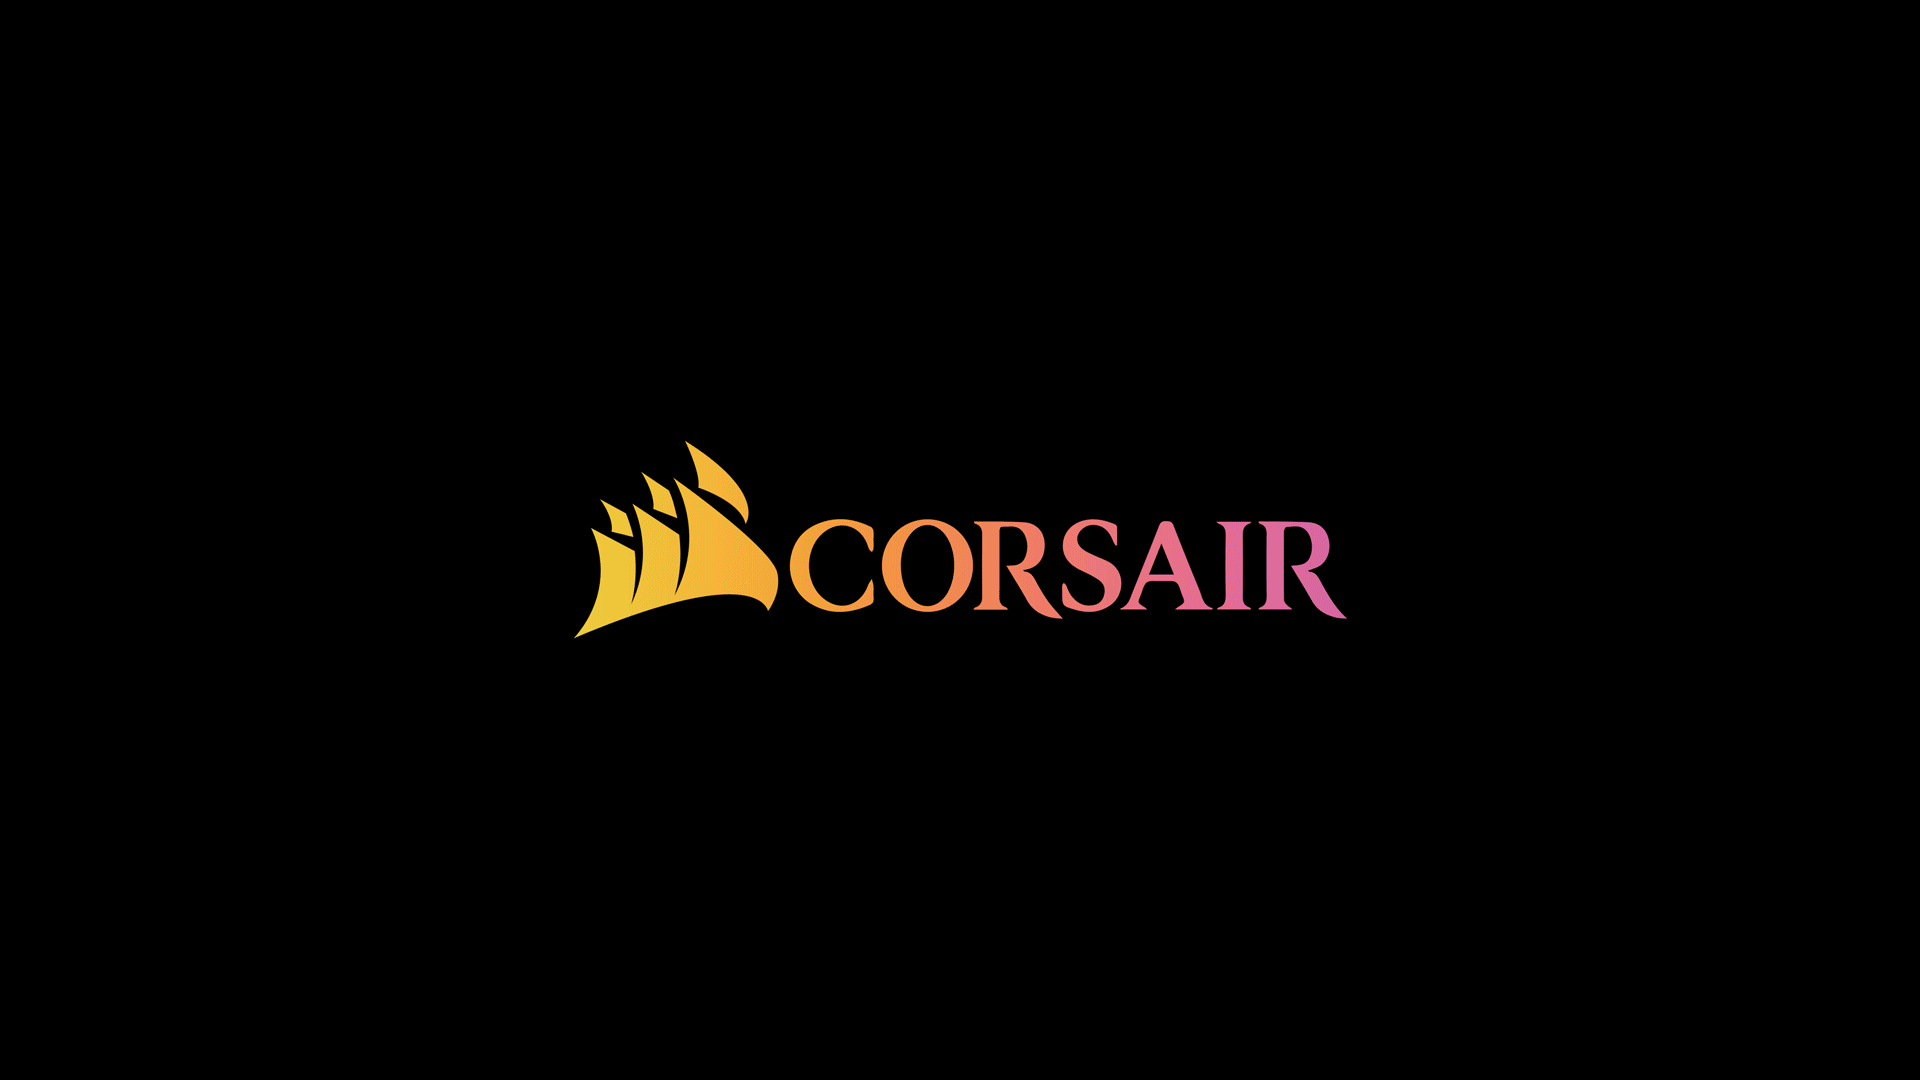 Steam Workshop Corsair Text Rgb 4k